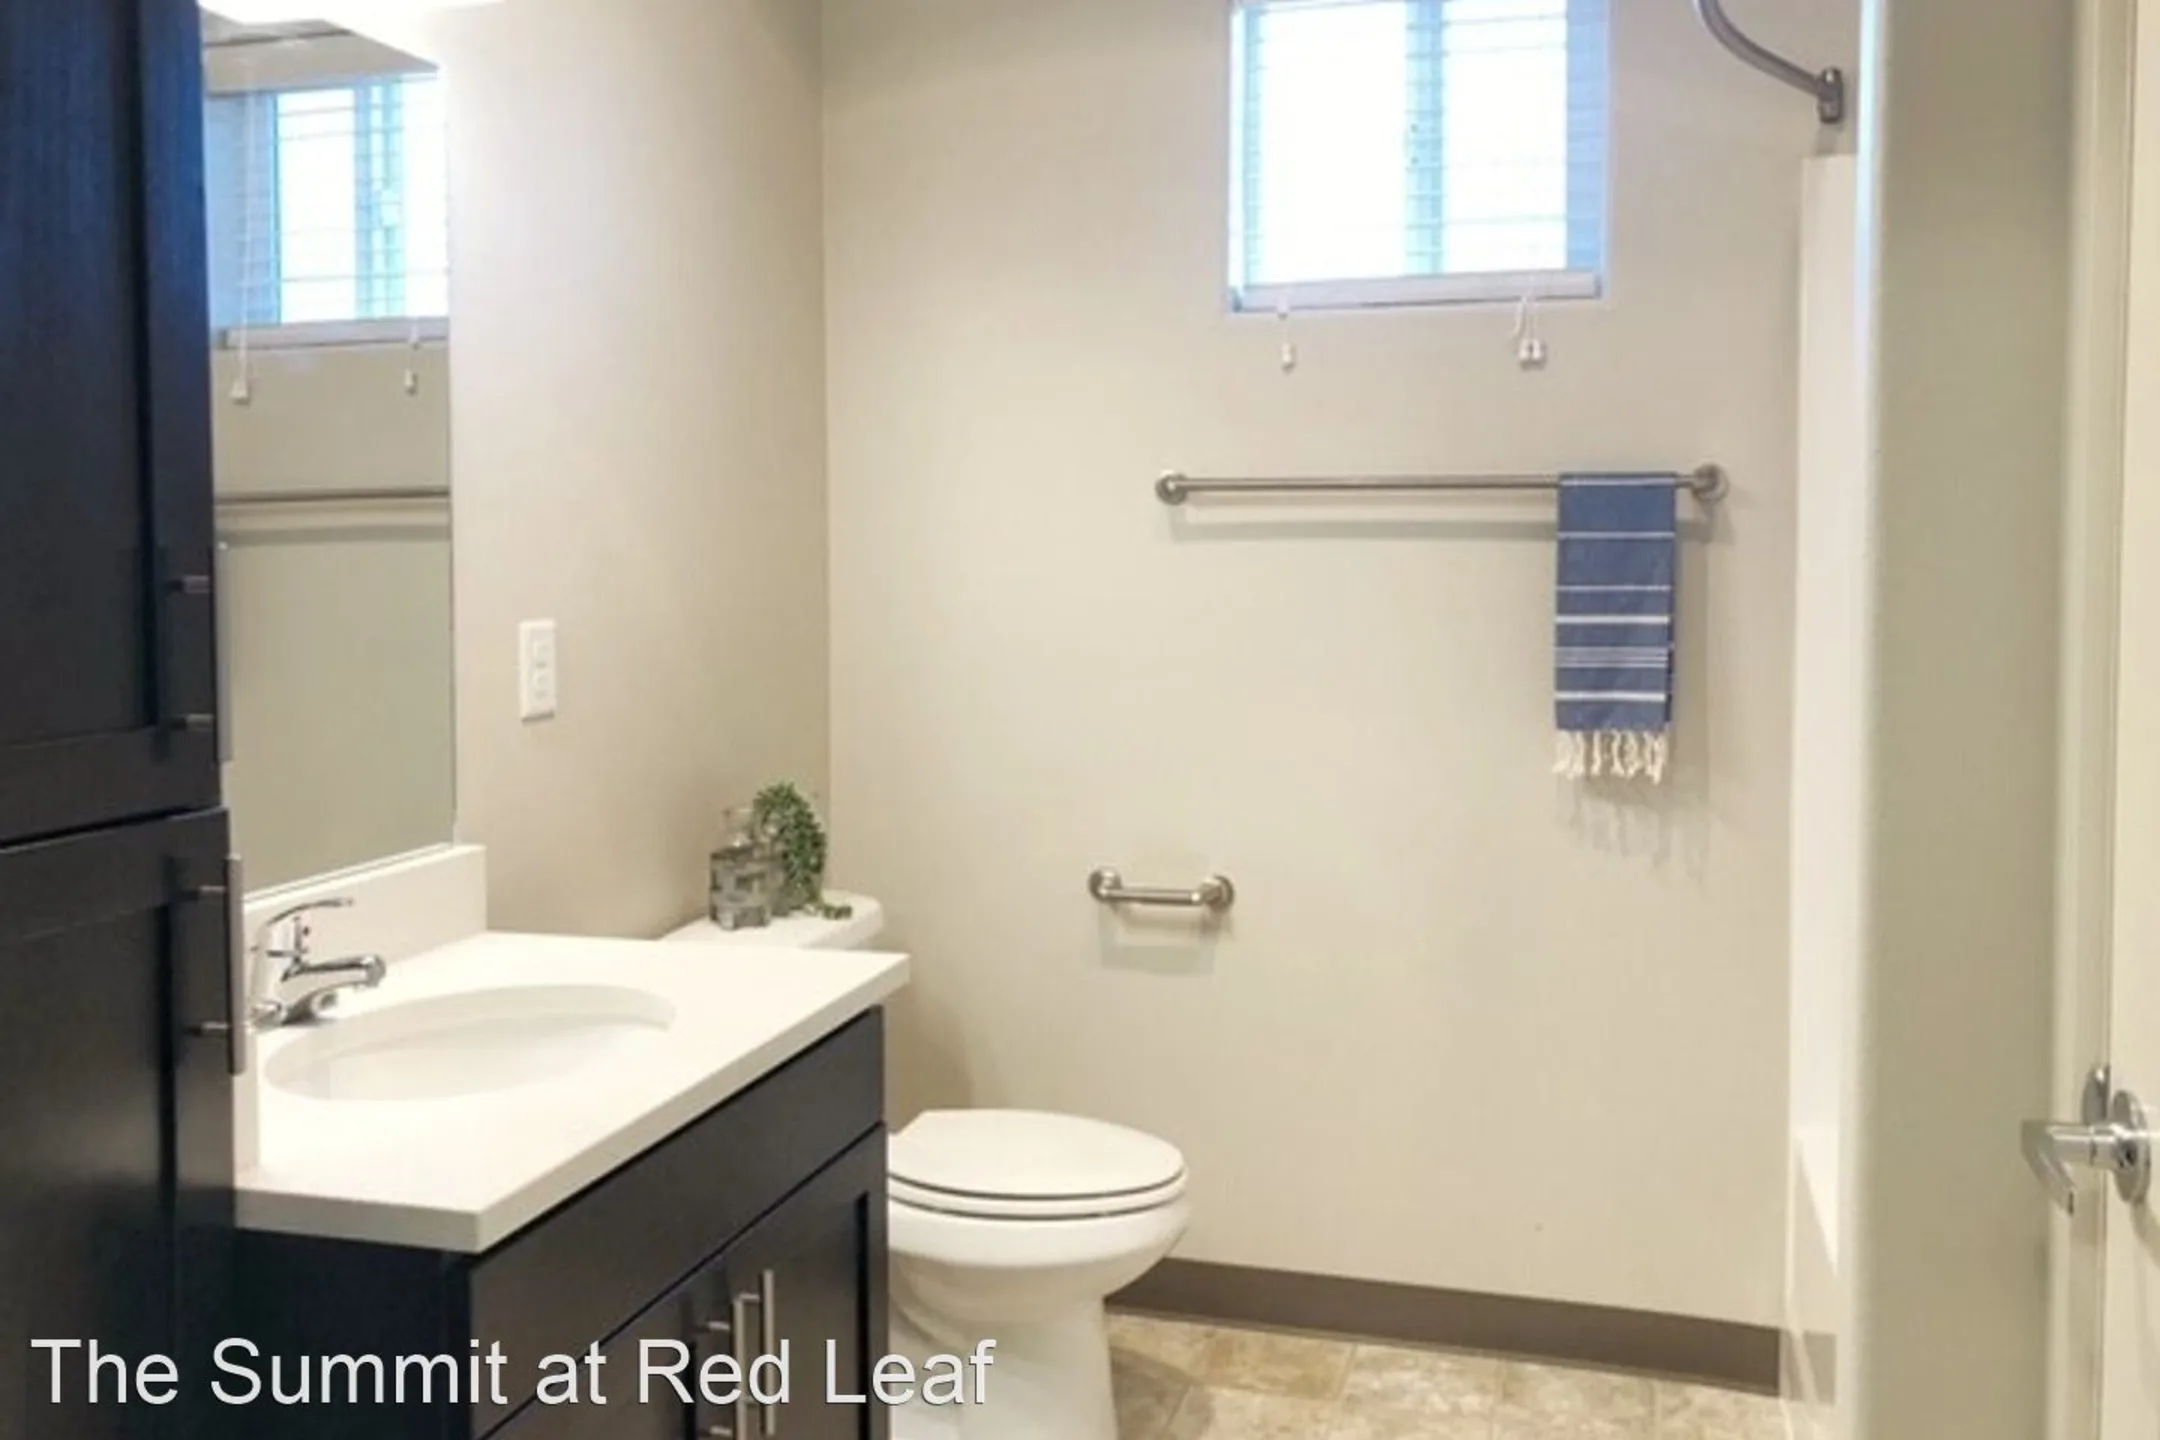 Bathroom - The Summit at Red Leaf - Salem, OR